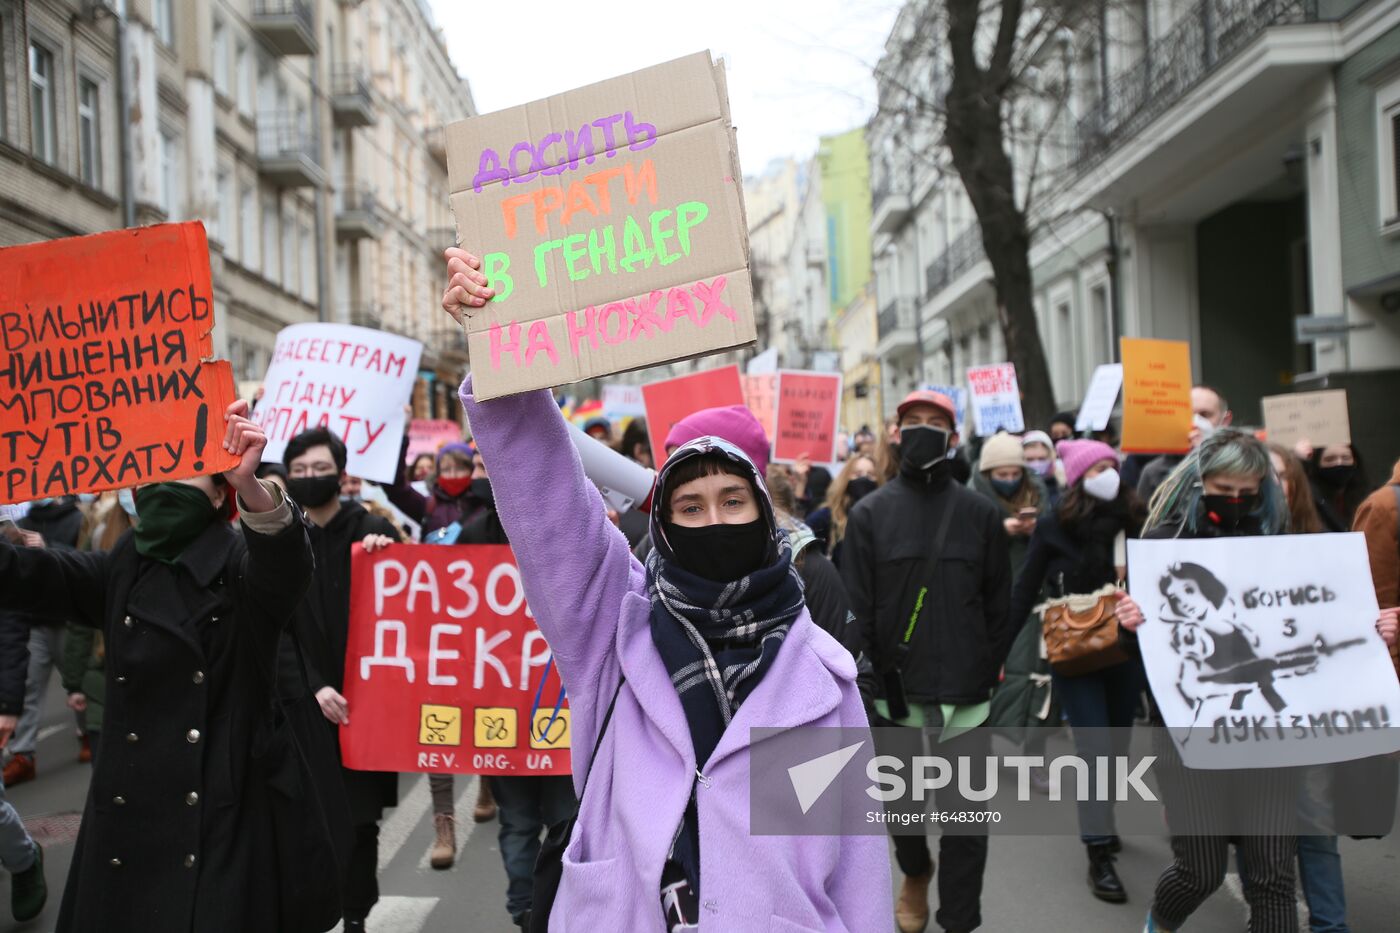 Worldwide Women's Day Marches